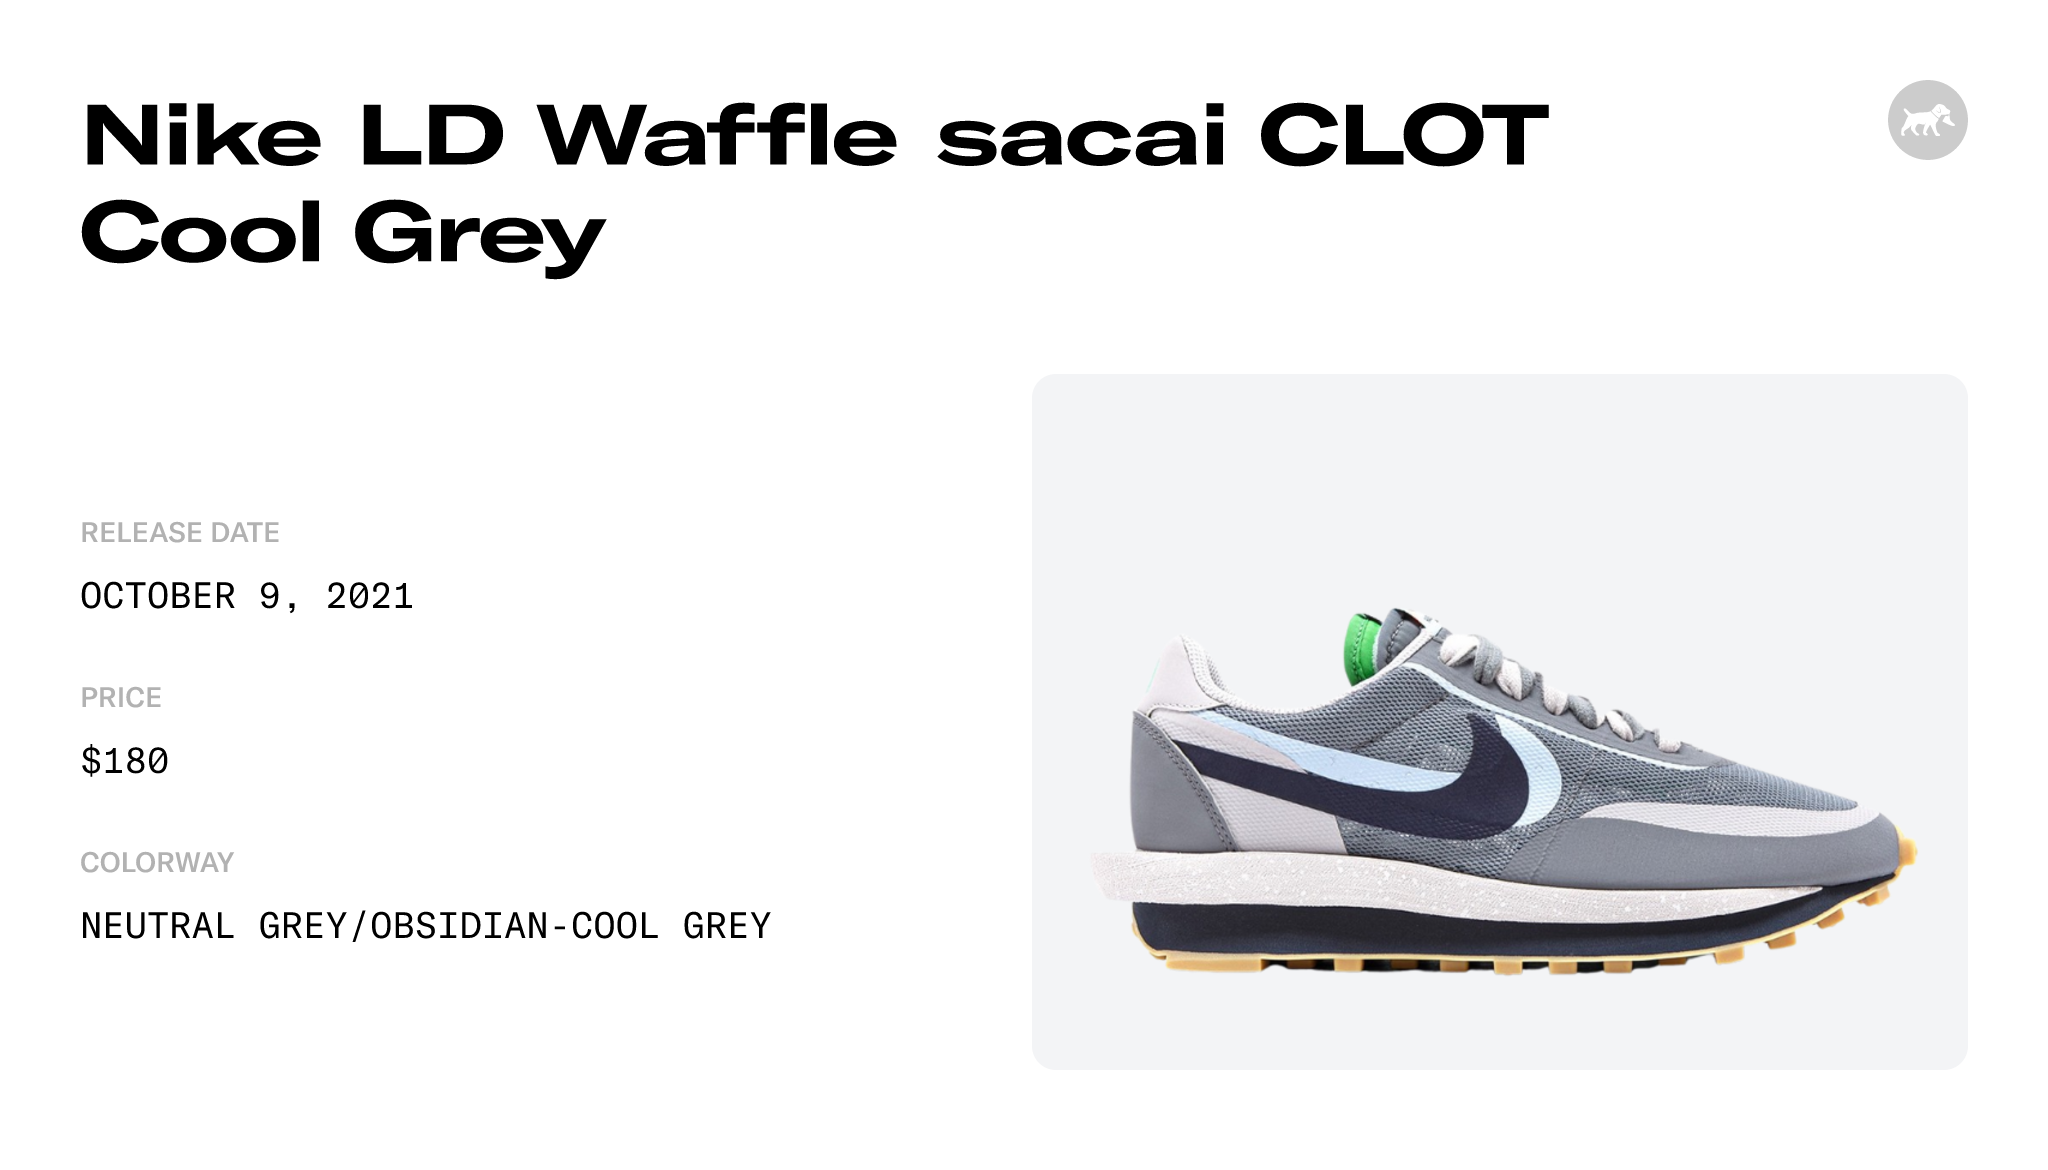 Nike LD Waffle sacai CLOT Cool Grey - DH3114-001 Raffles and 